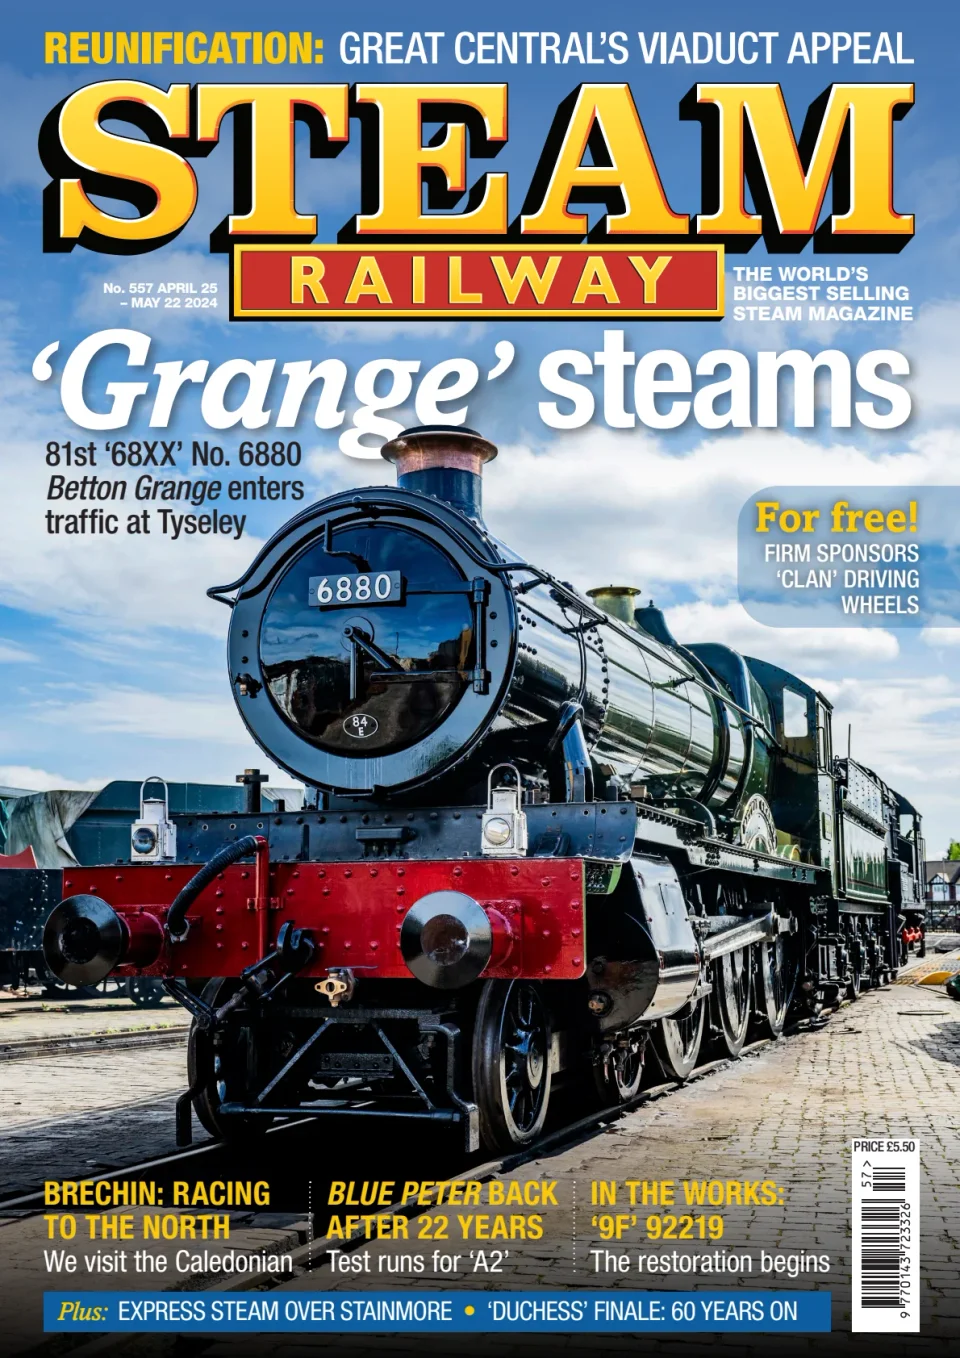 Steam Railway (UK)